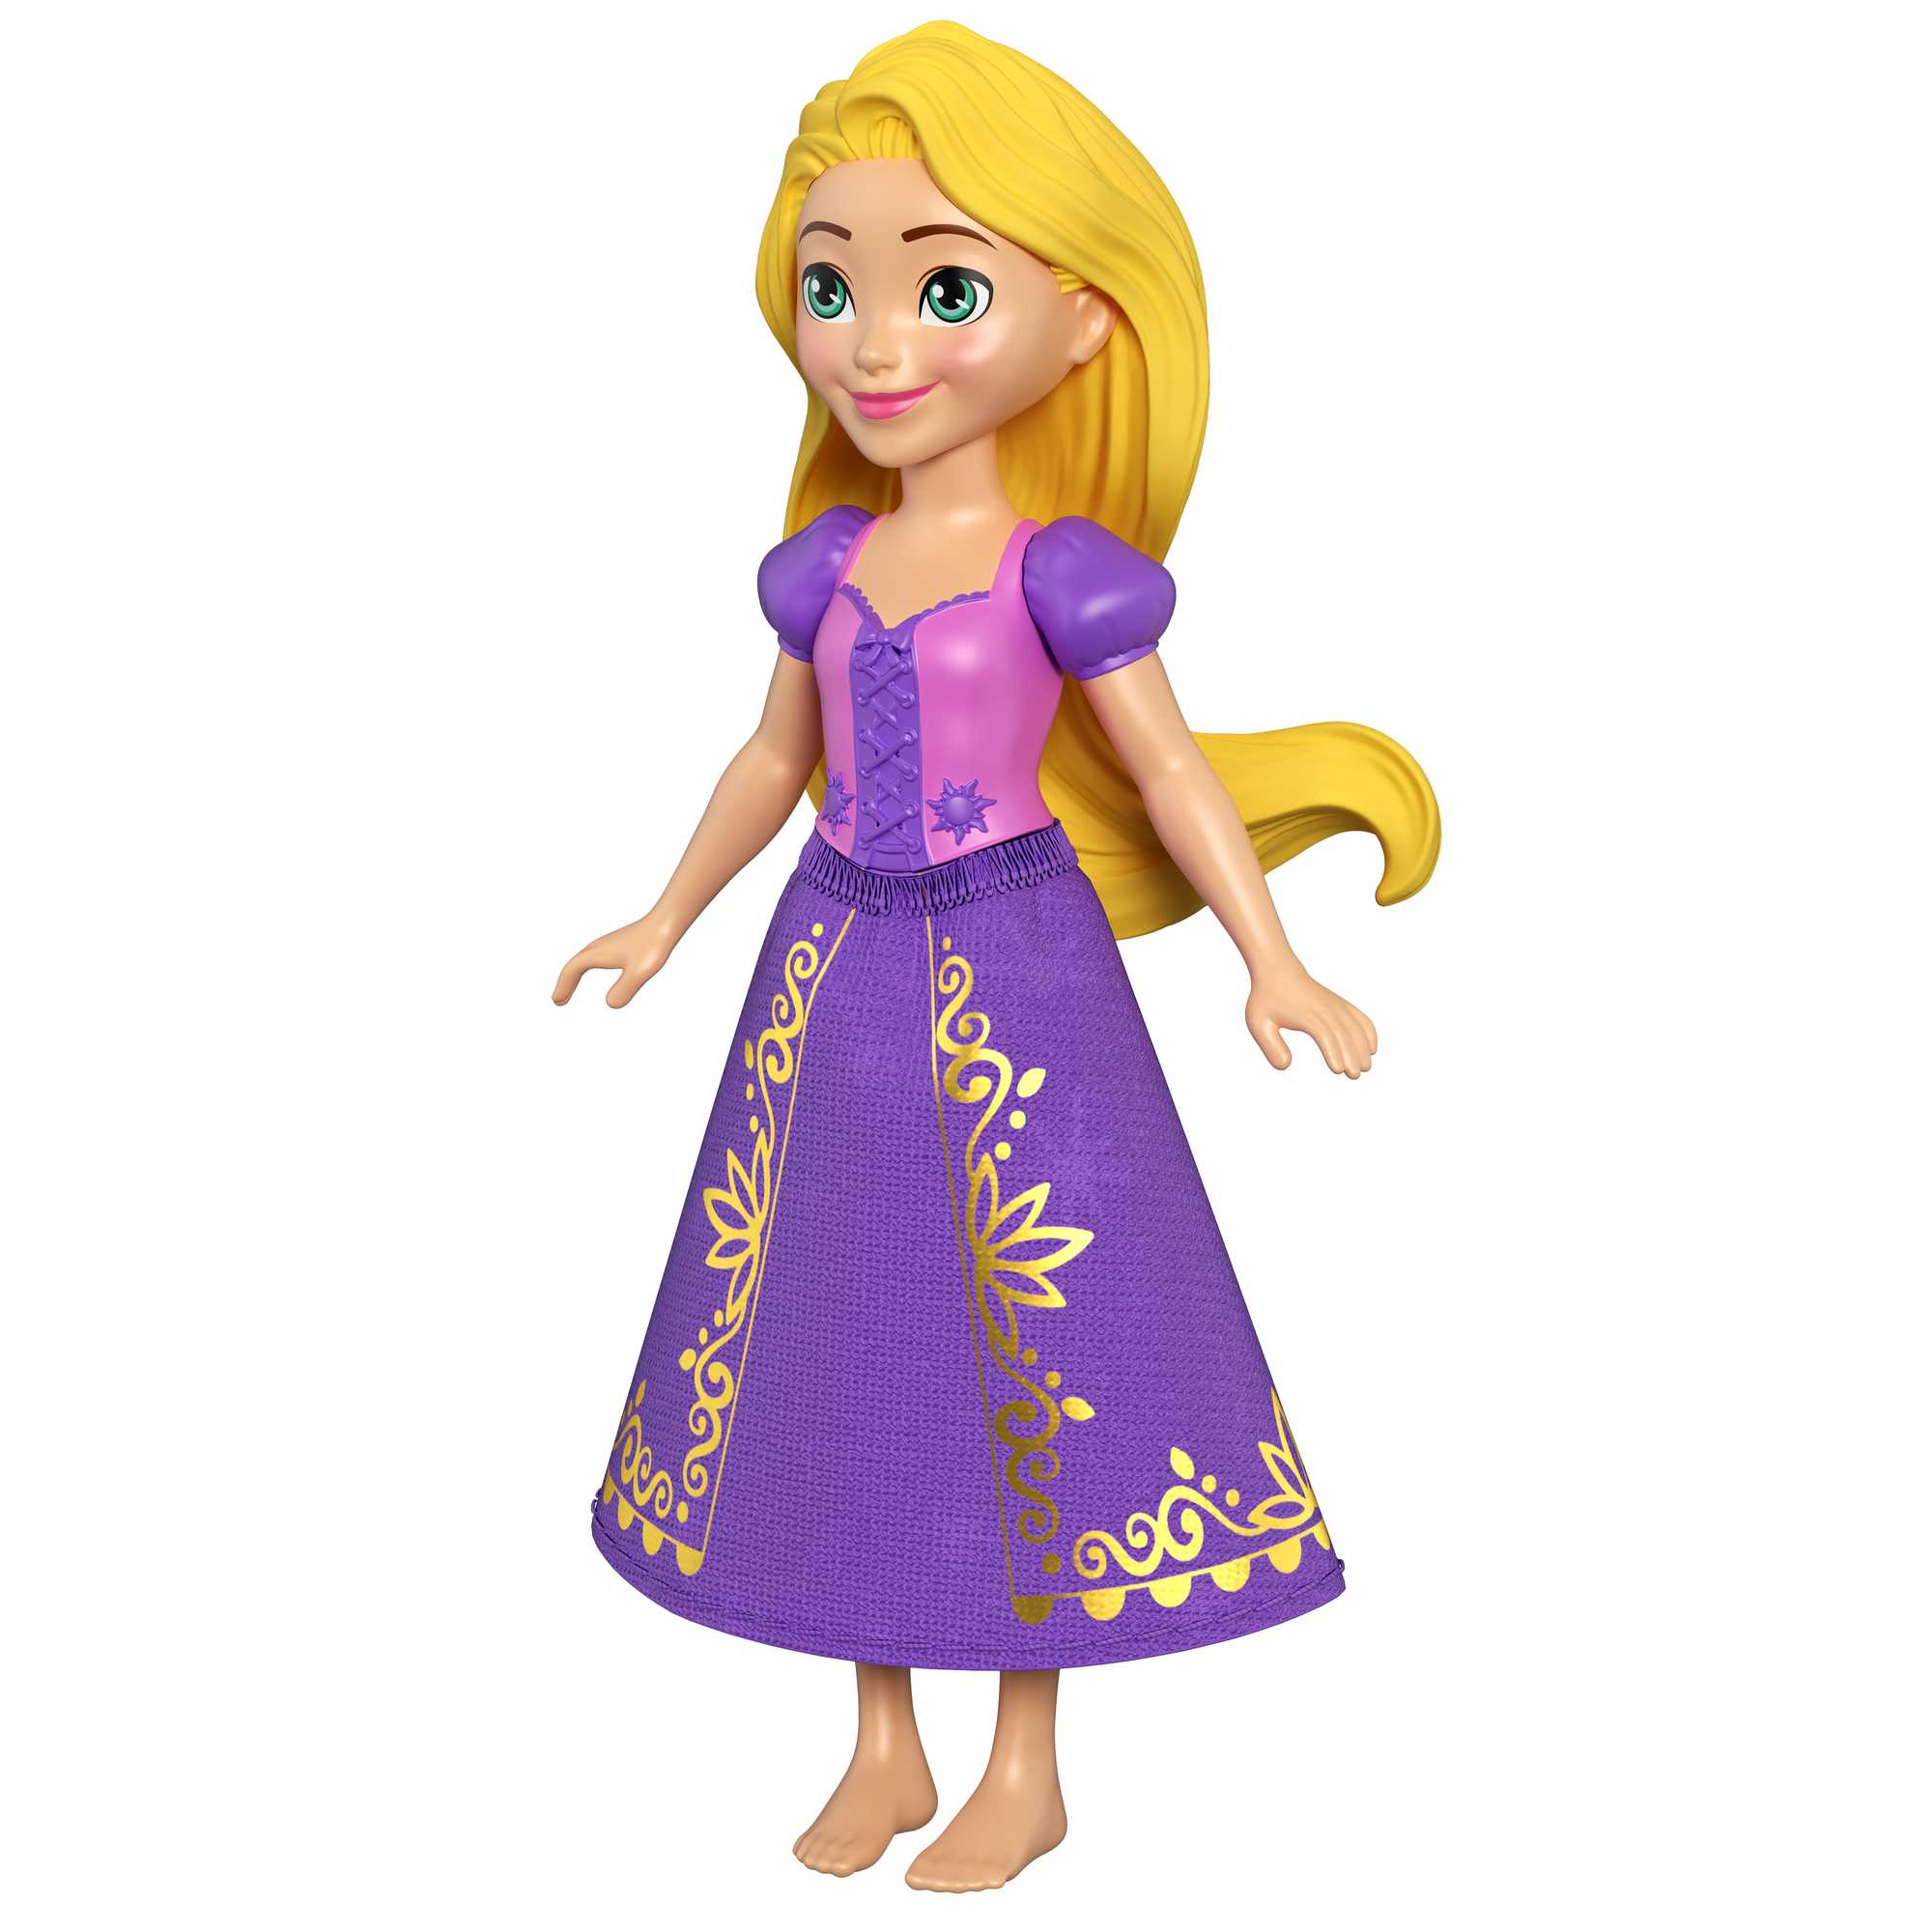 Disney Princess Rapunzel en Maximus 0194735121113